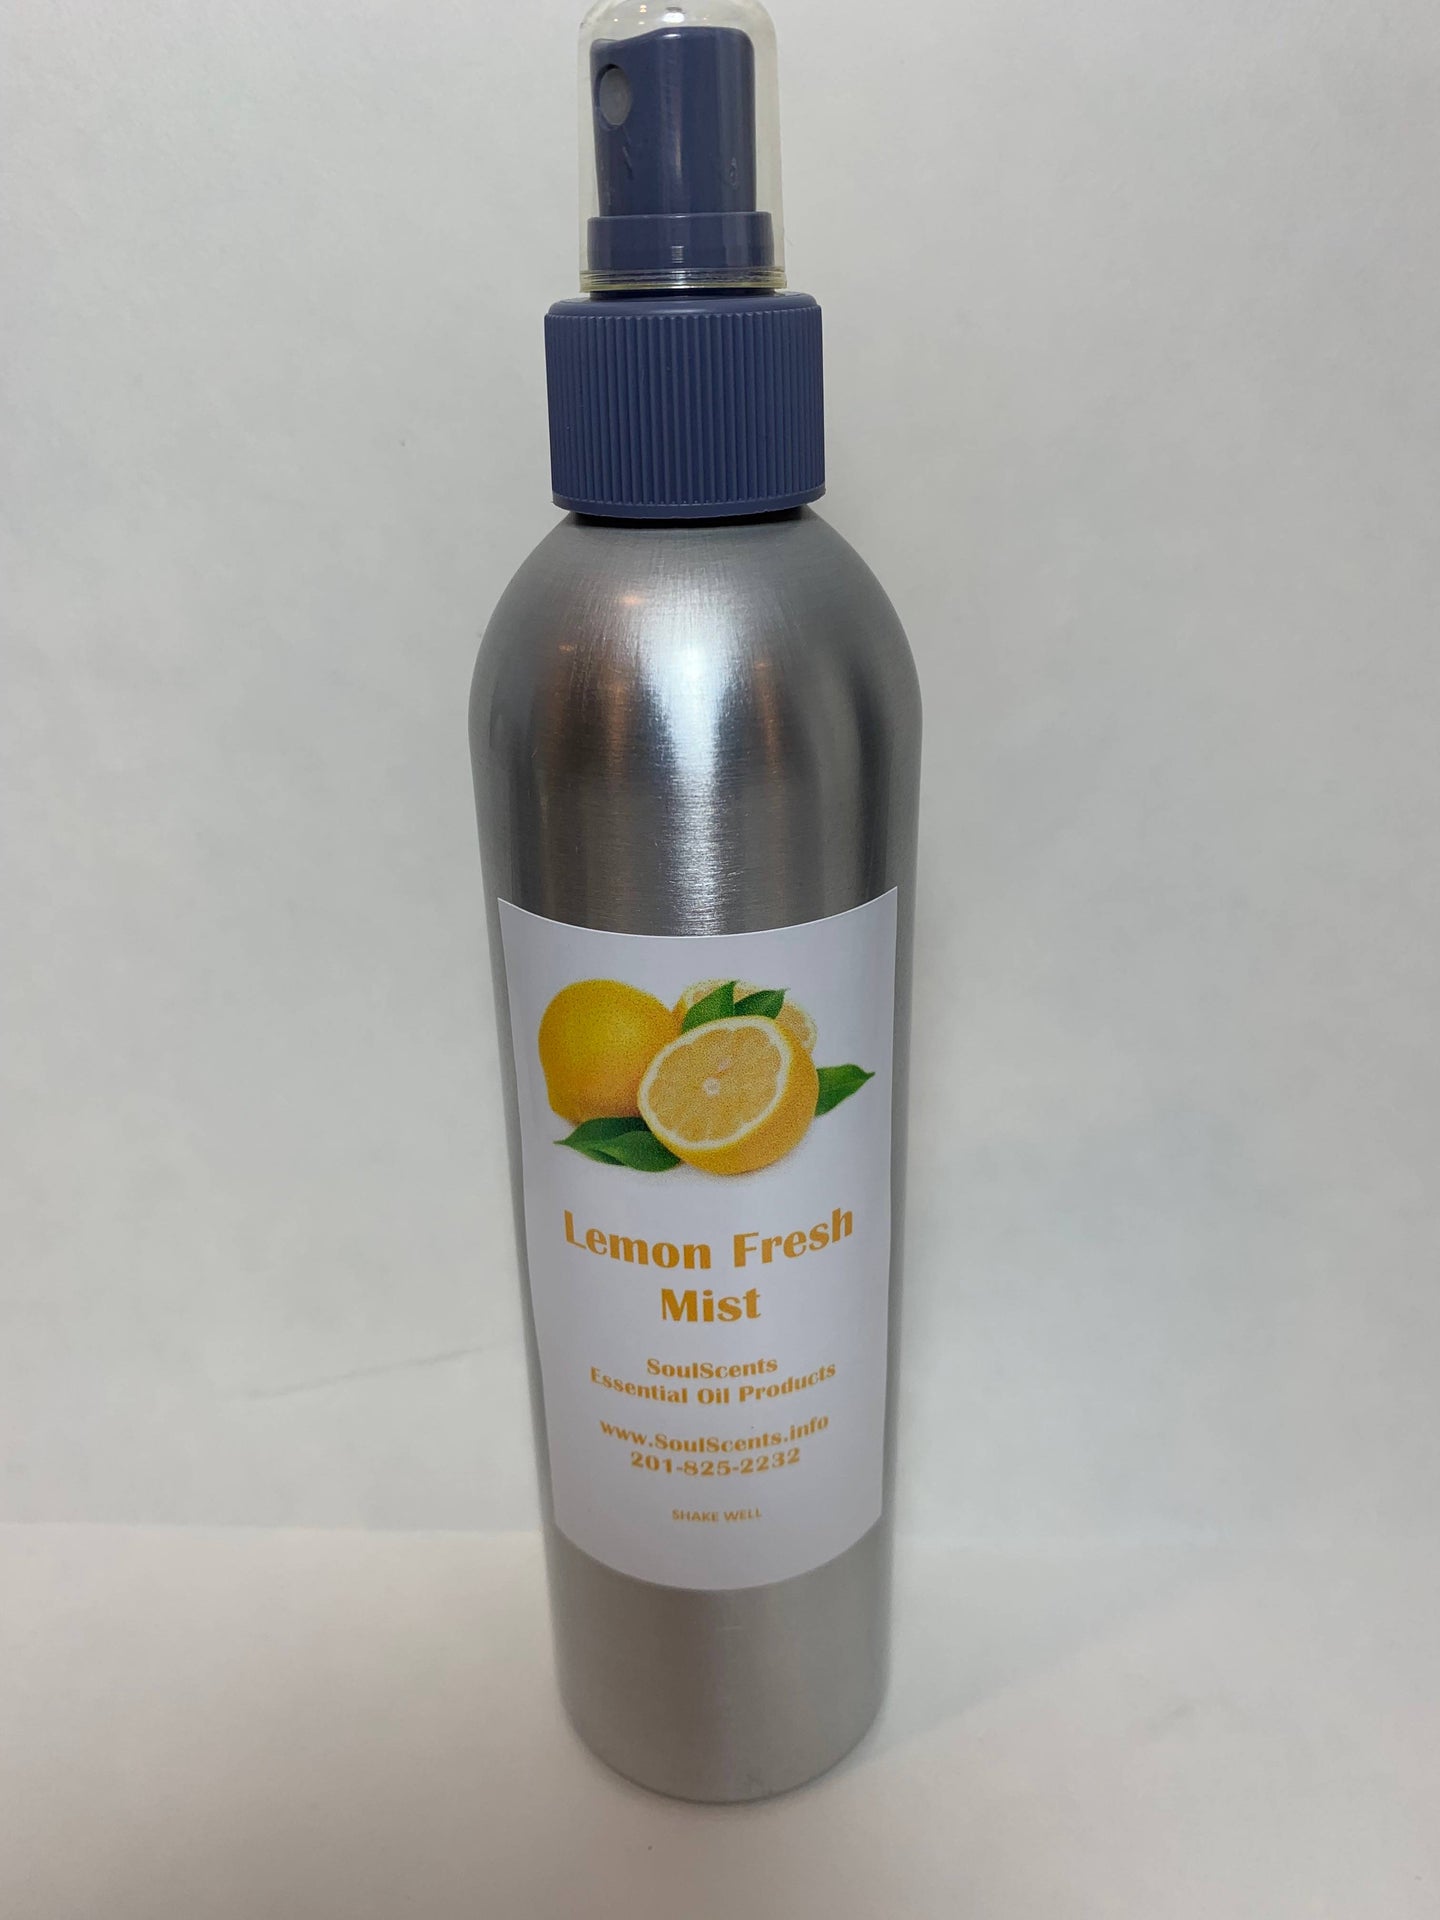 Lemon Essential Oil Body and Room Mist